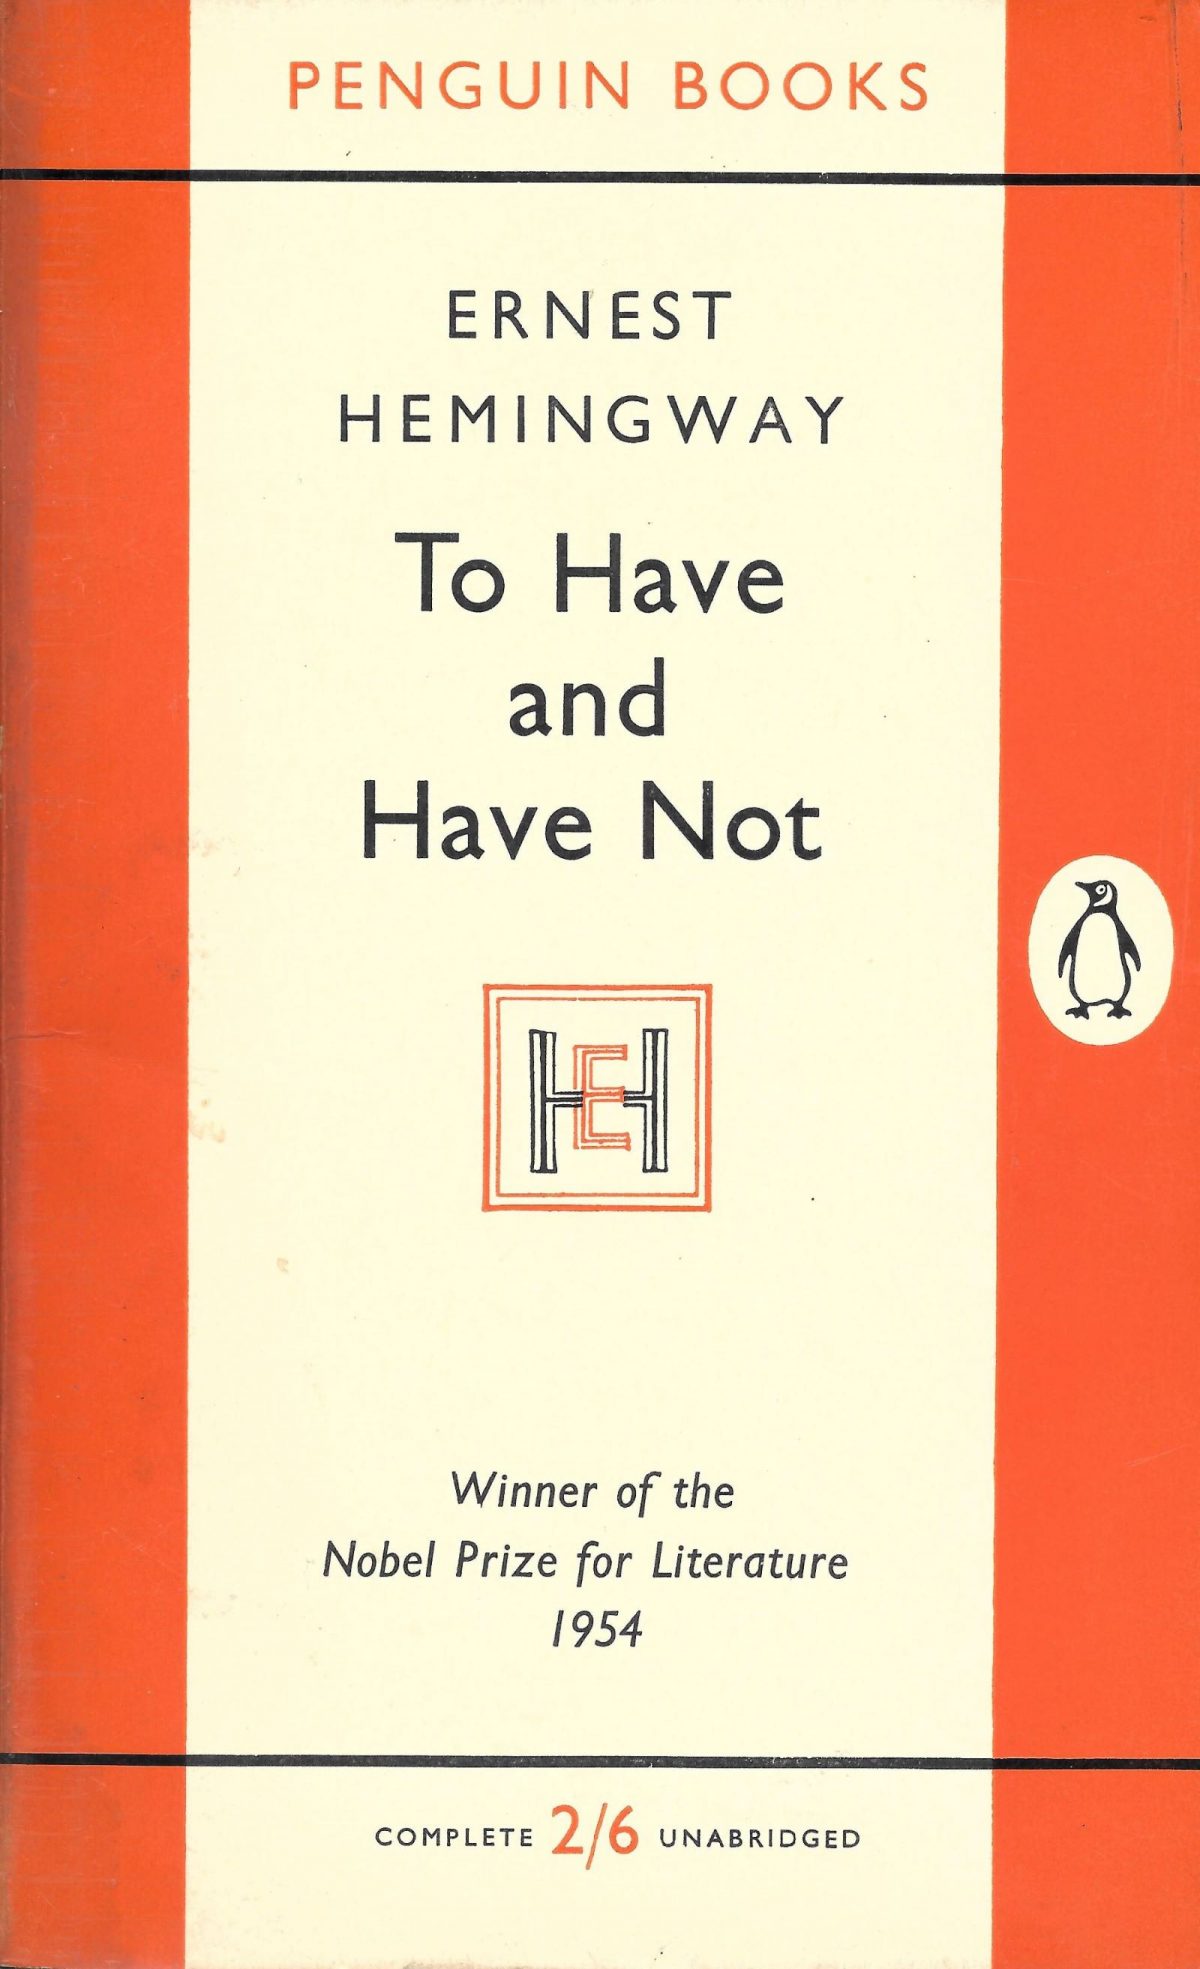 Ernest Hemingway, books, literature, design, book covers, 